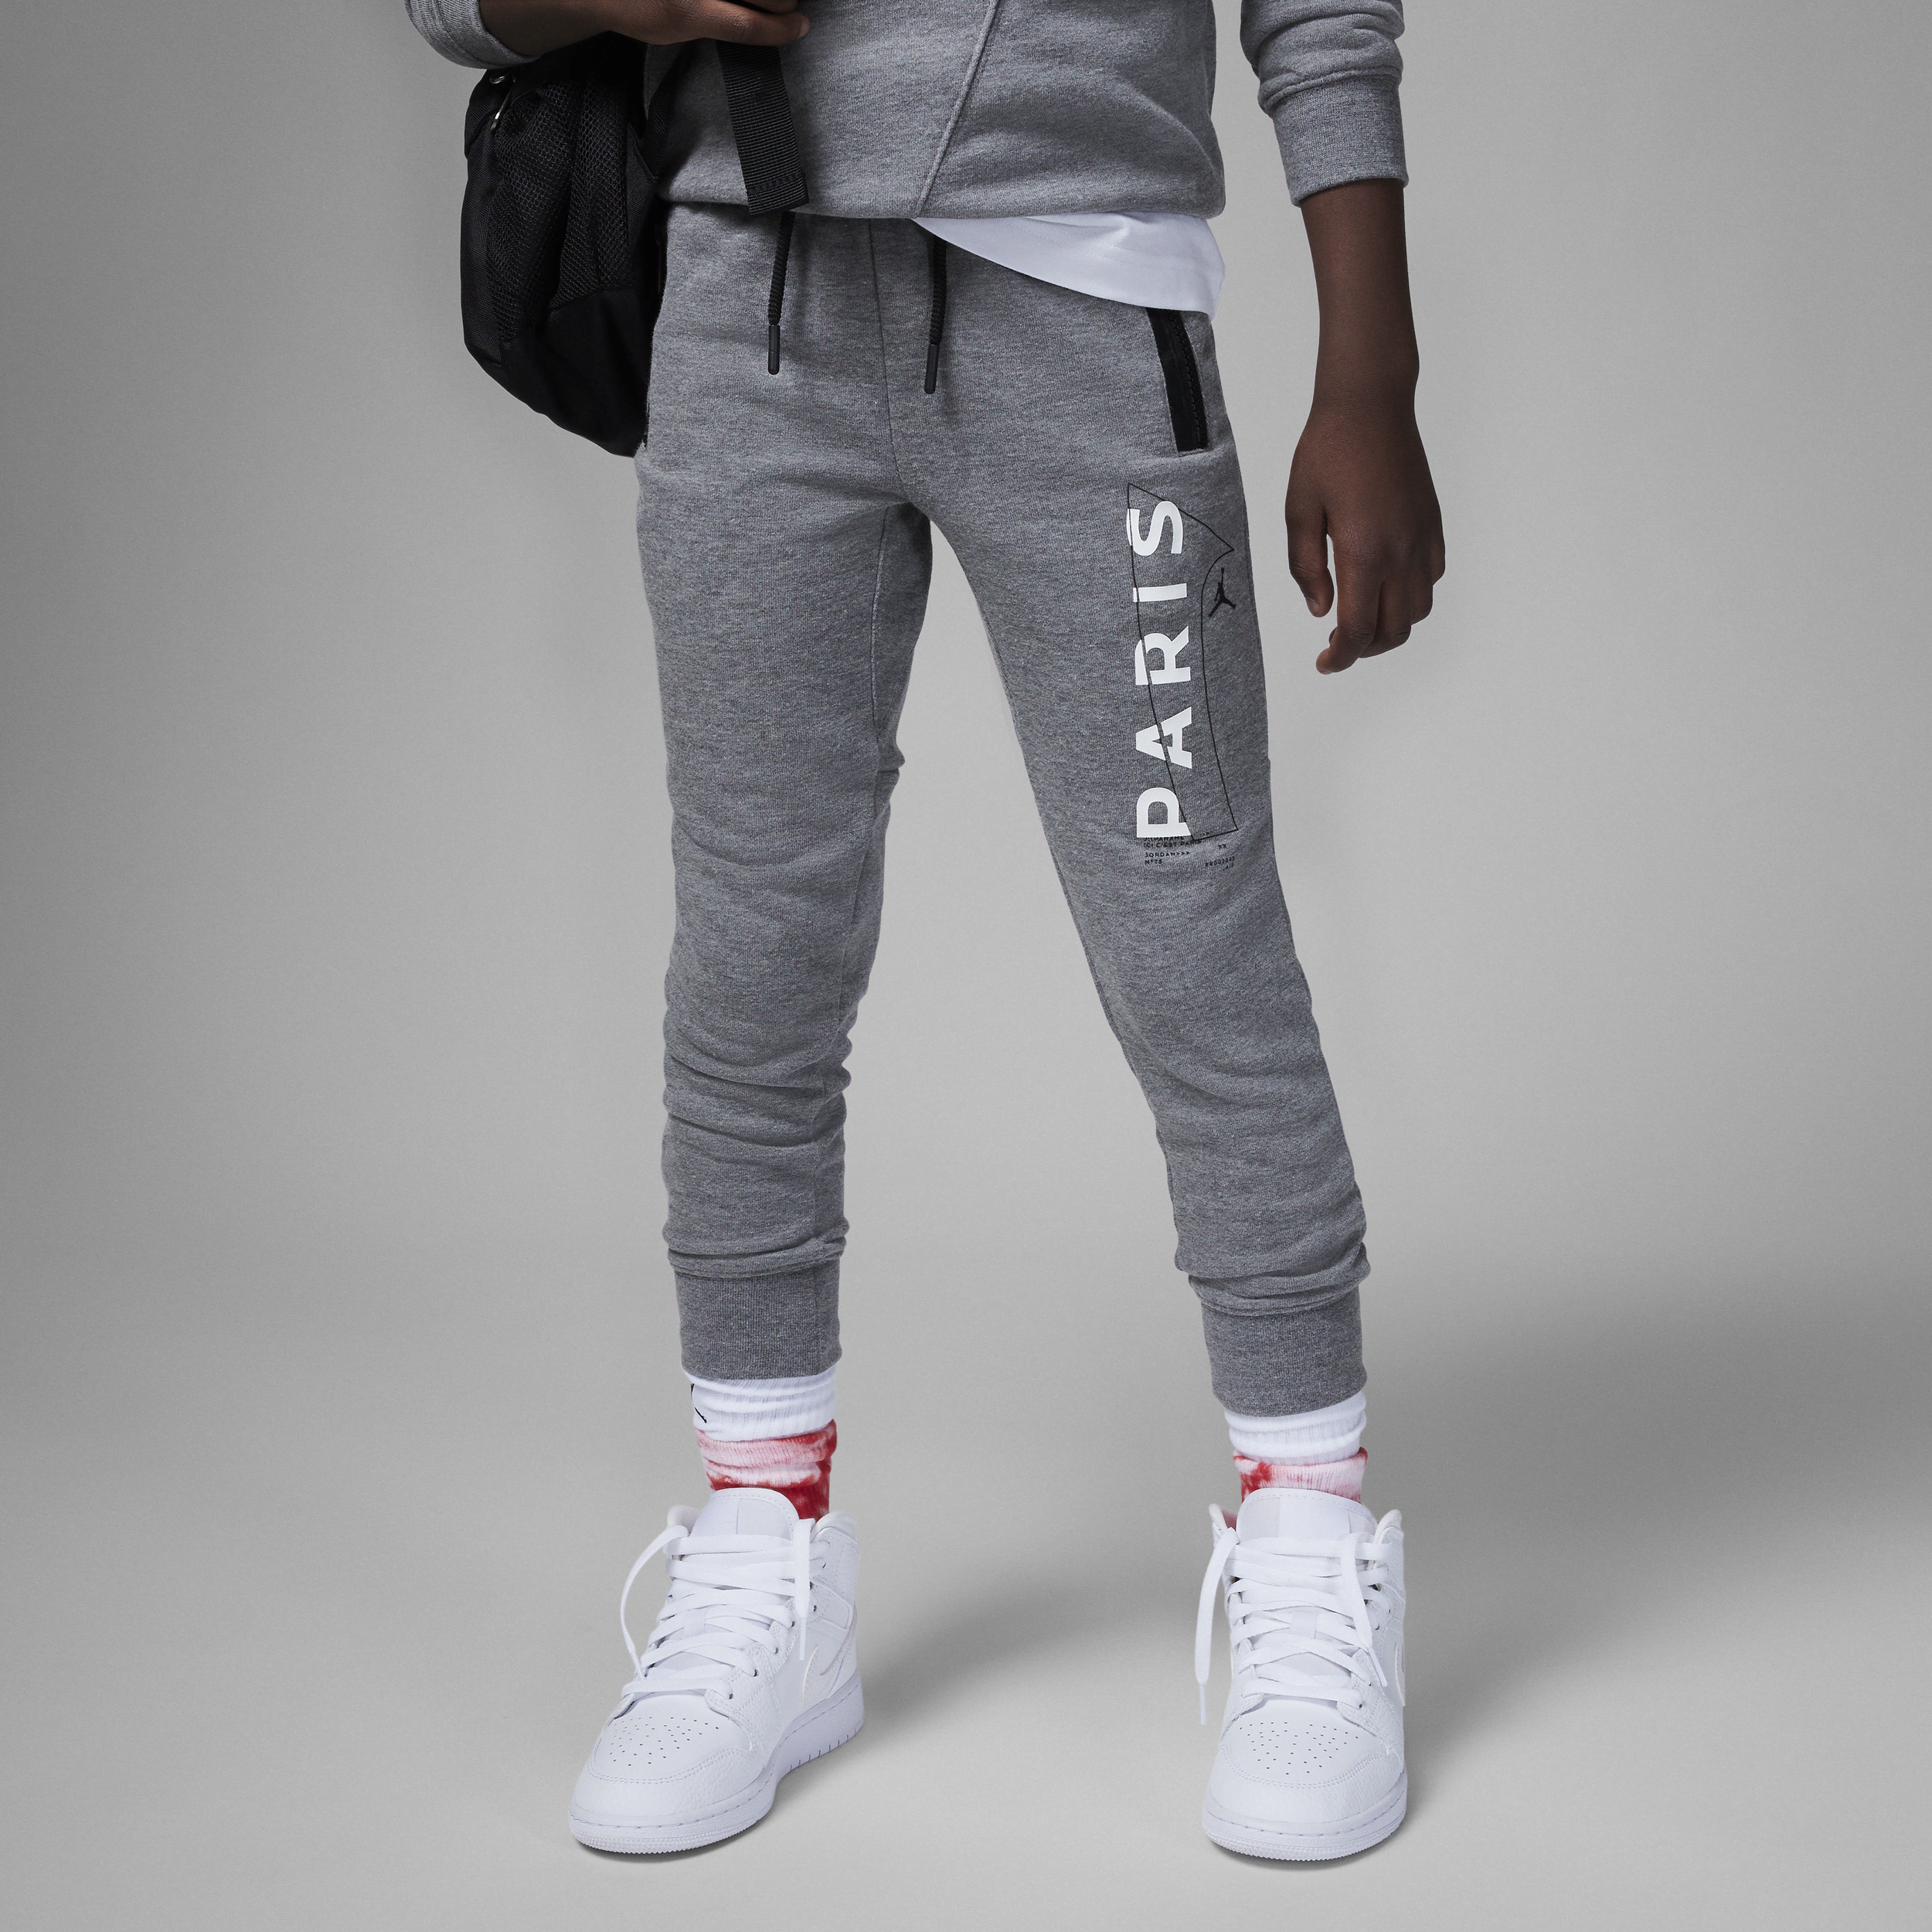 Jordan-Paris Saint-Germain-french terry-bukser til mindre børn - grå